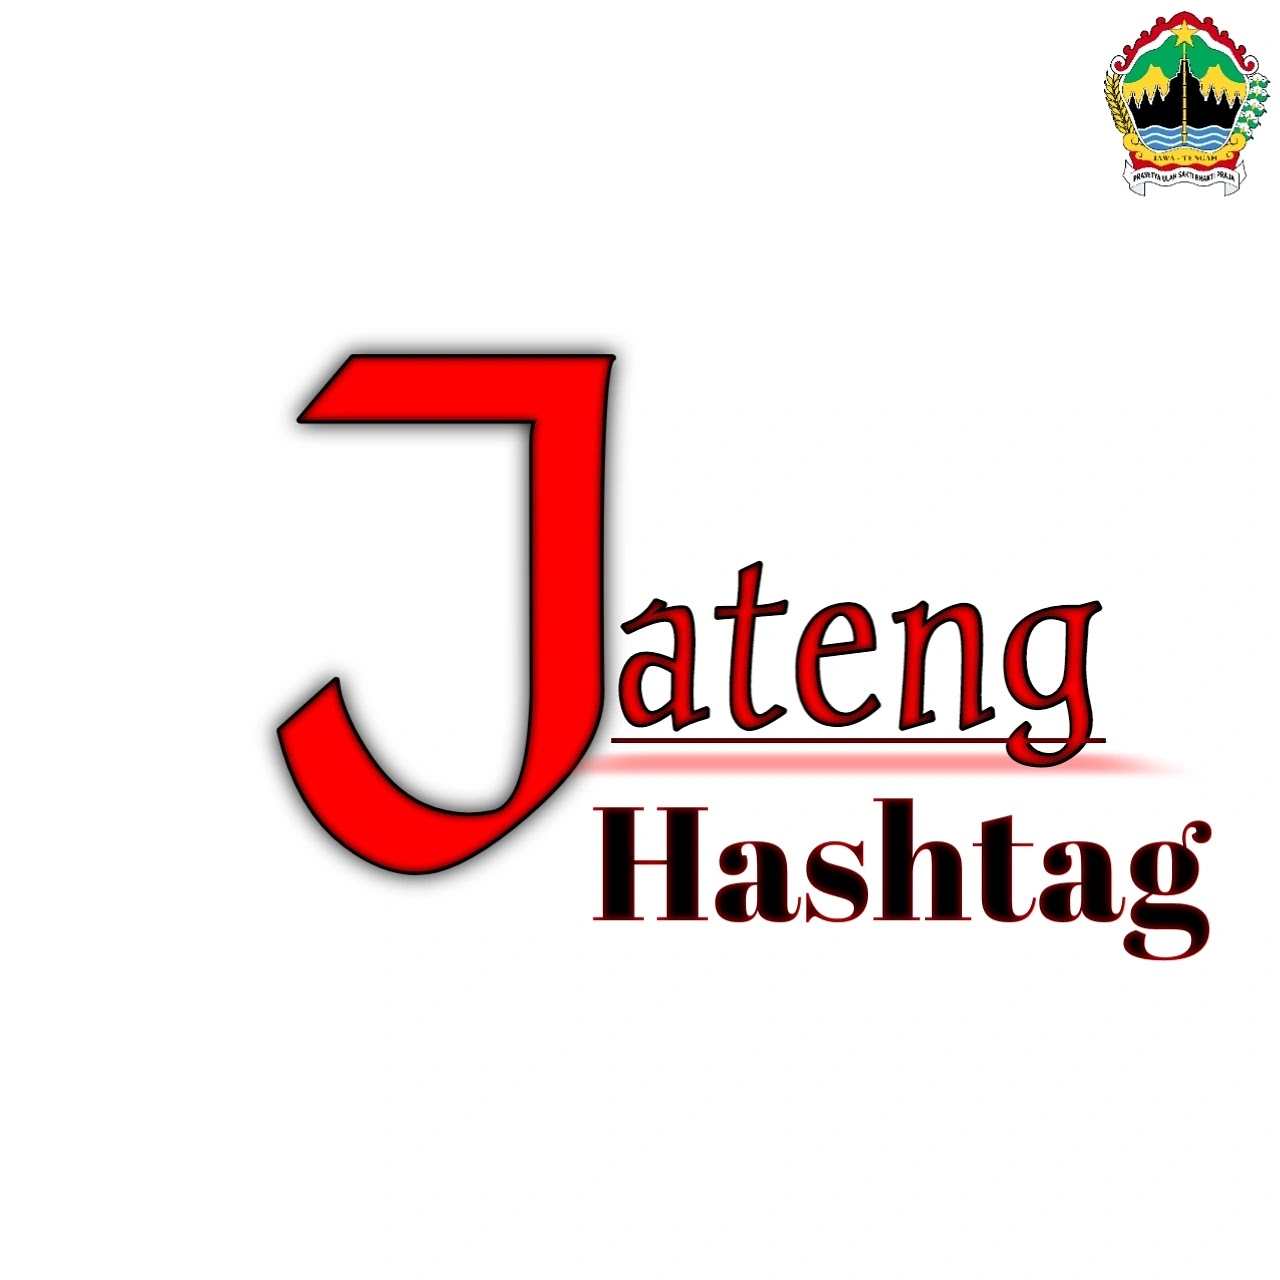 Hashtag Jateng